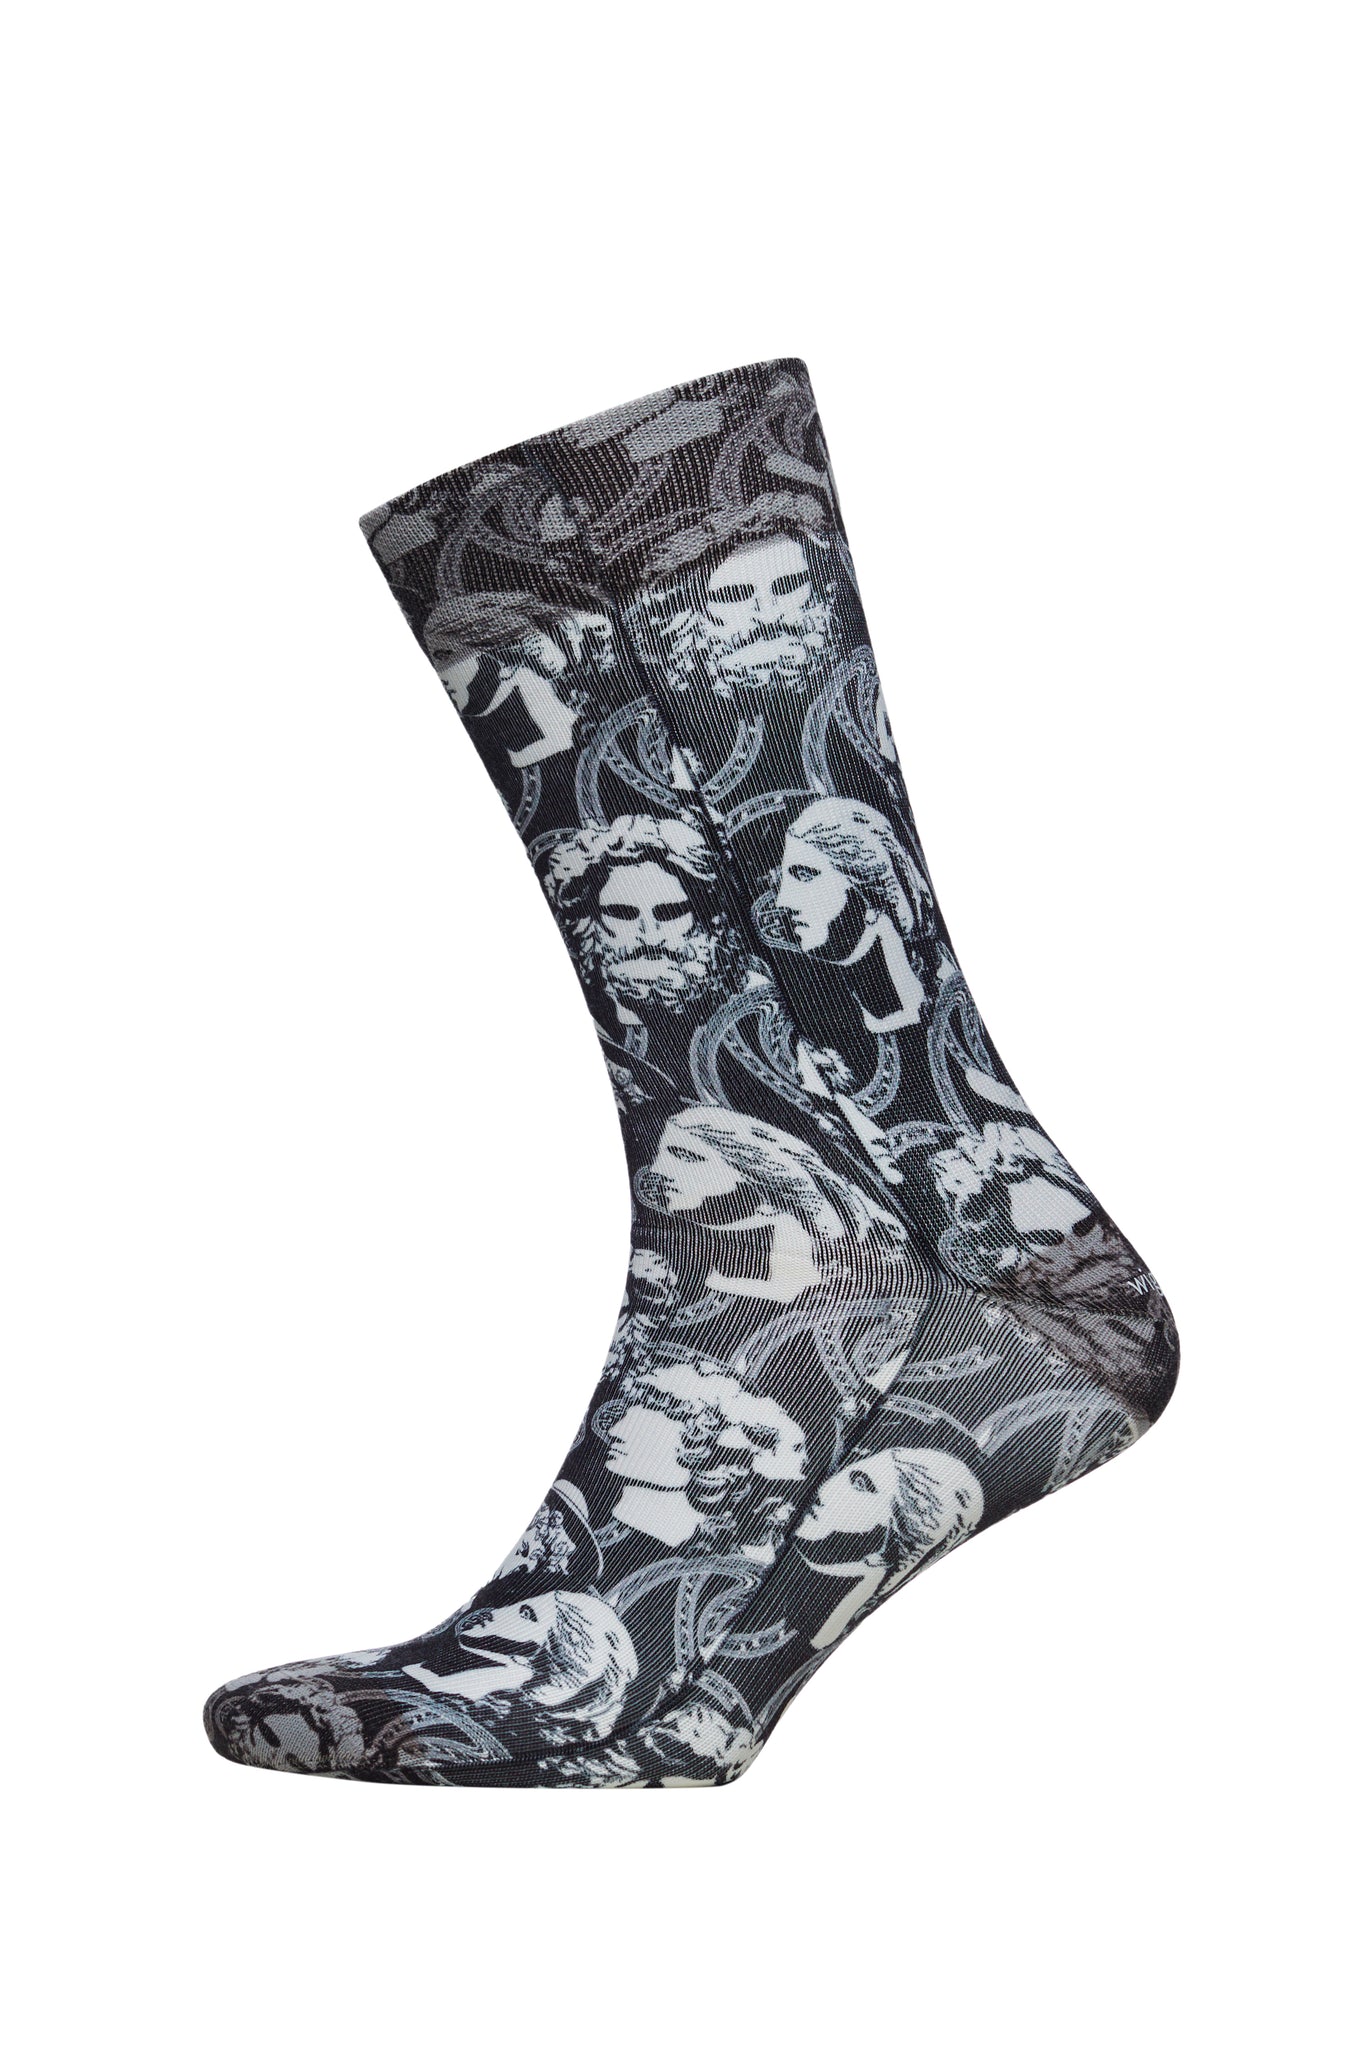 Mythology Man Sock